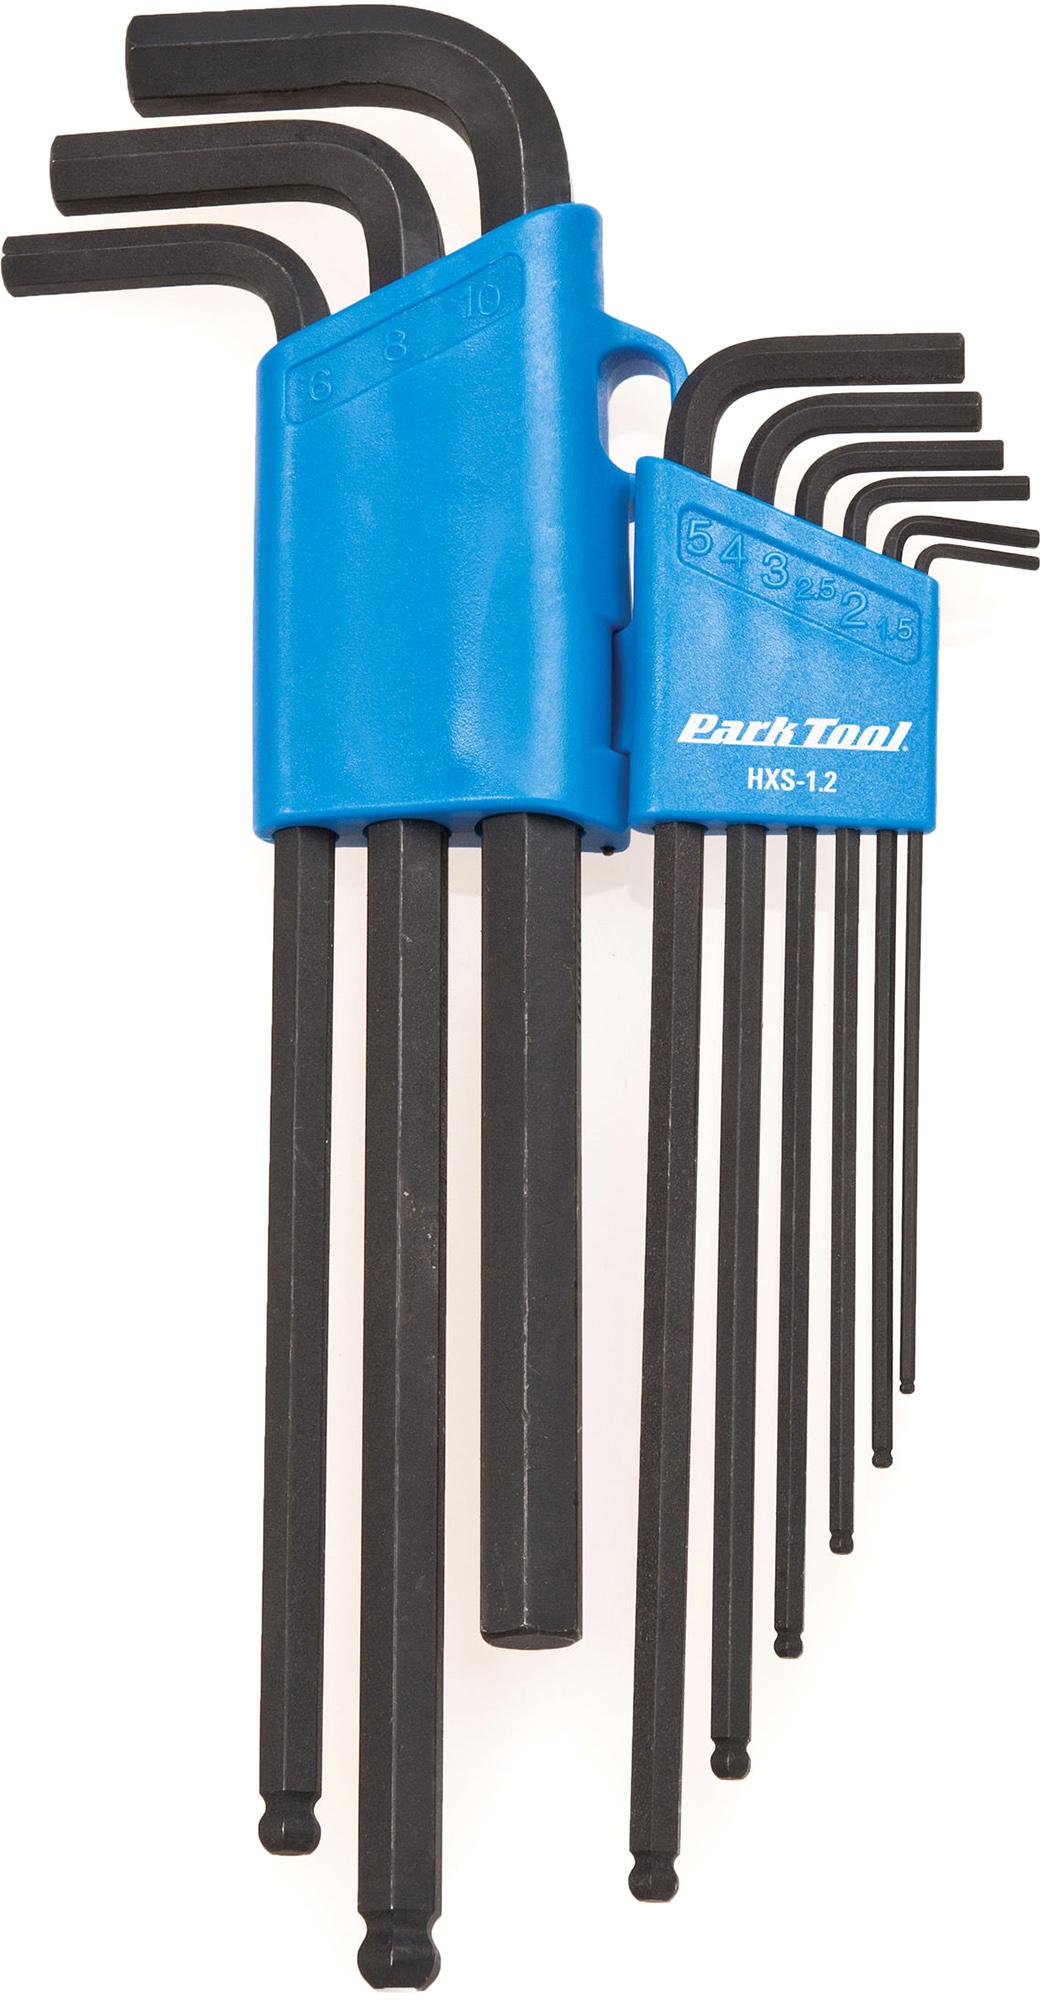 Park Tool Professional L-shaped Hex Wrench Set Hxs  Black